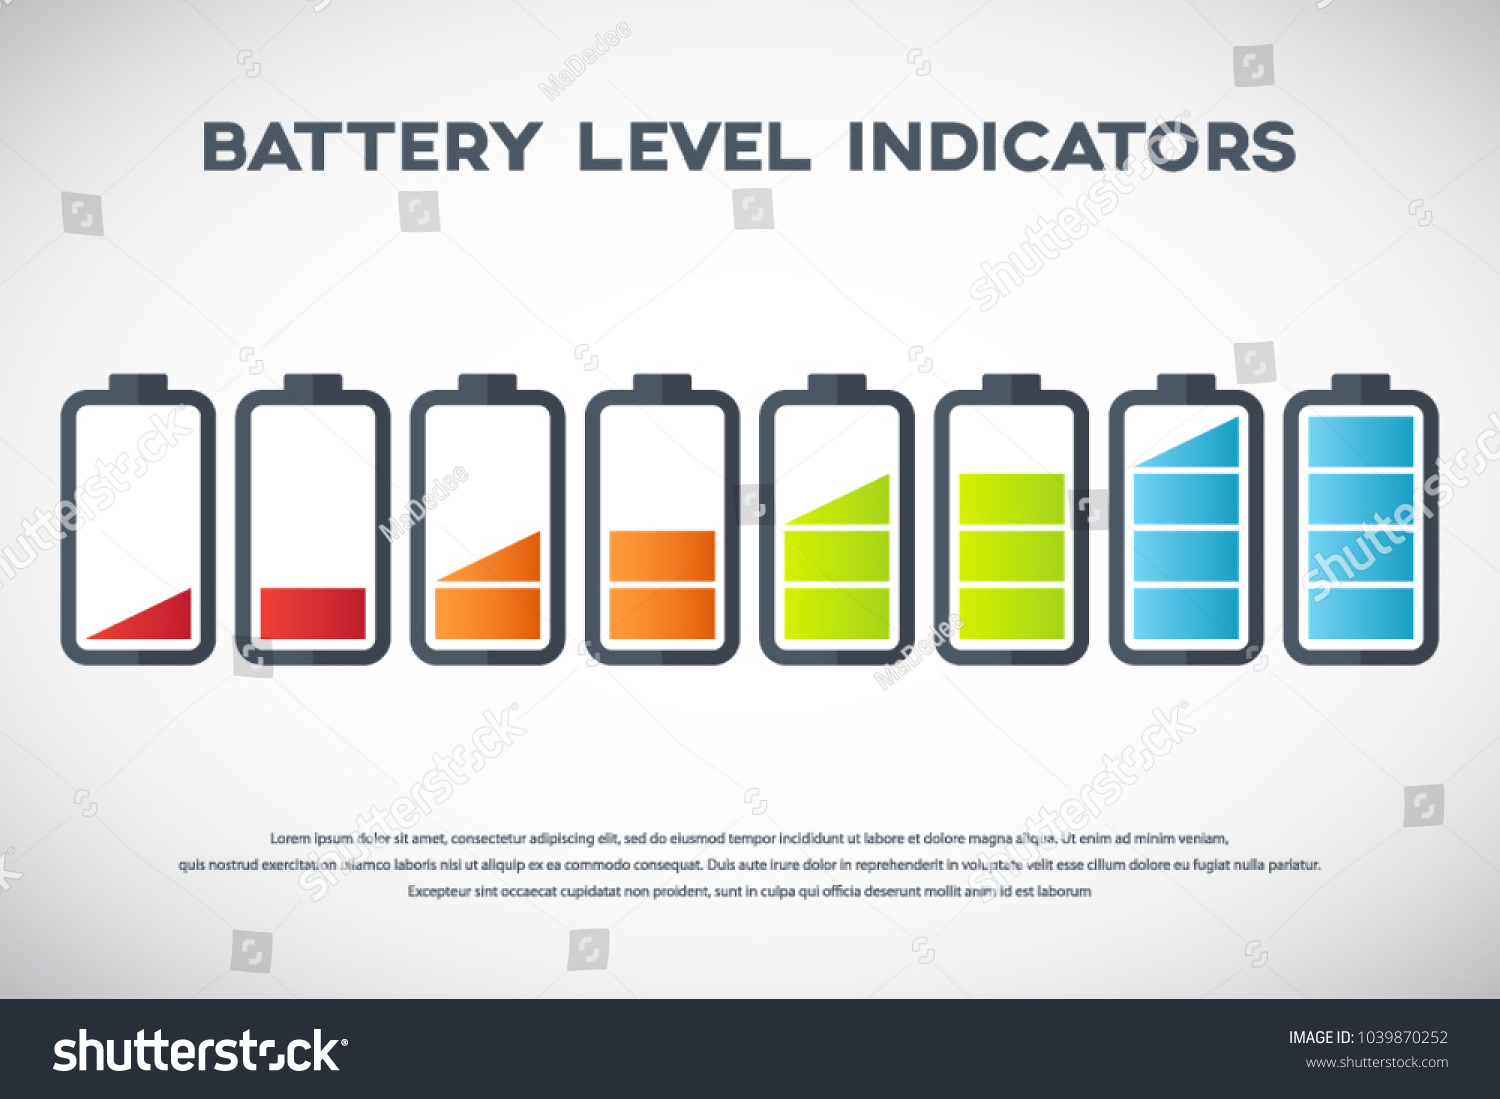 Illustration of battery level indicators. Battery life, accumulator, battery running low, battery recharging vector. #1039870252